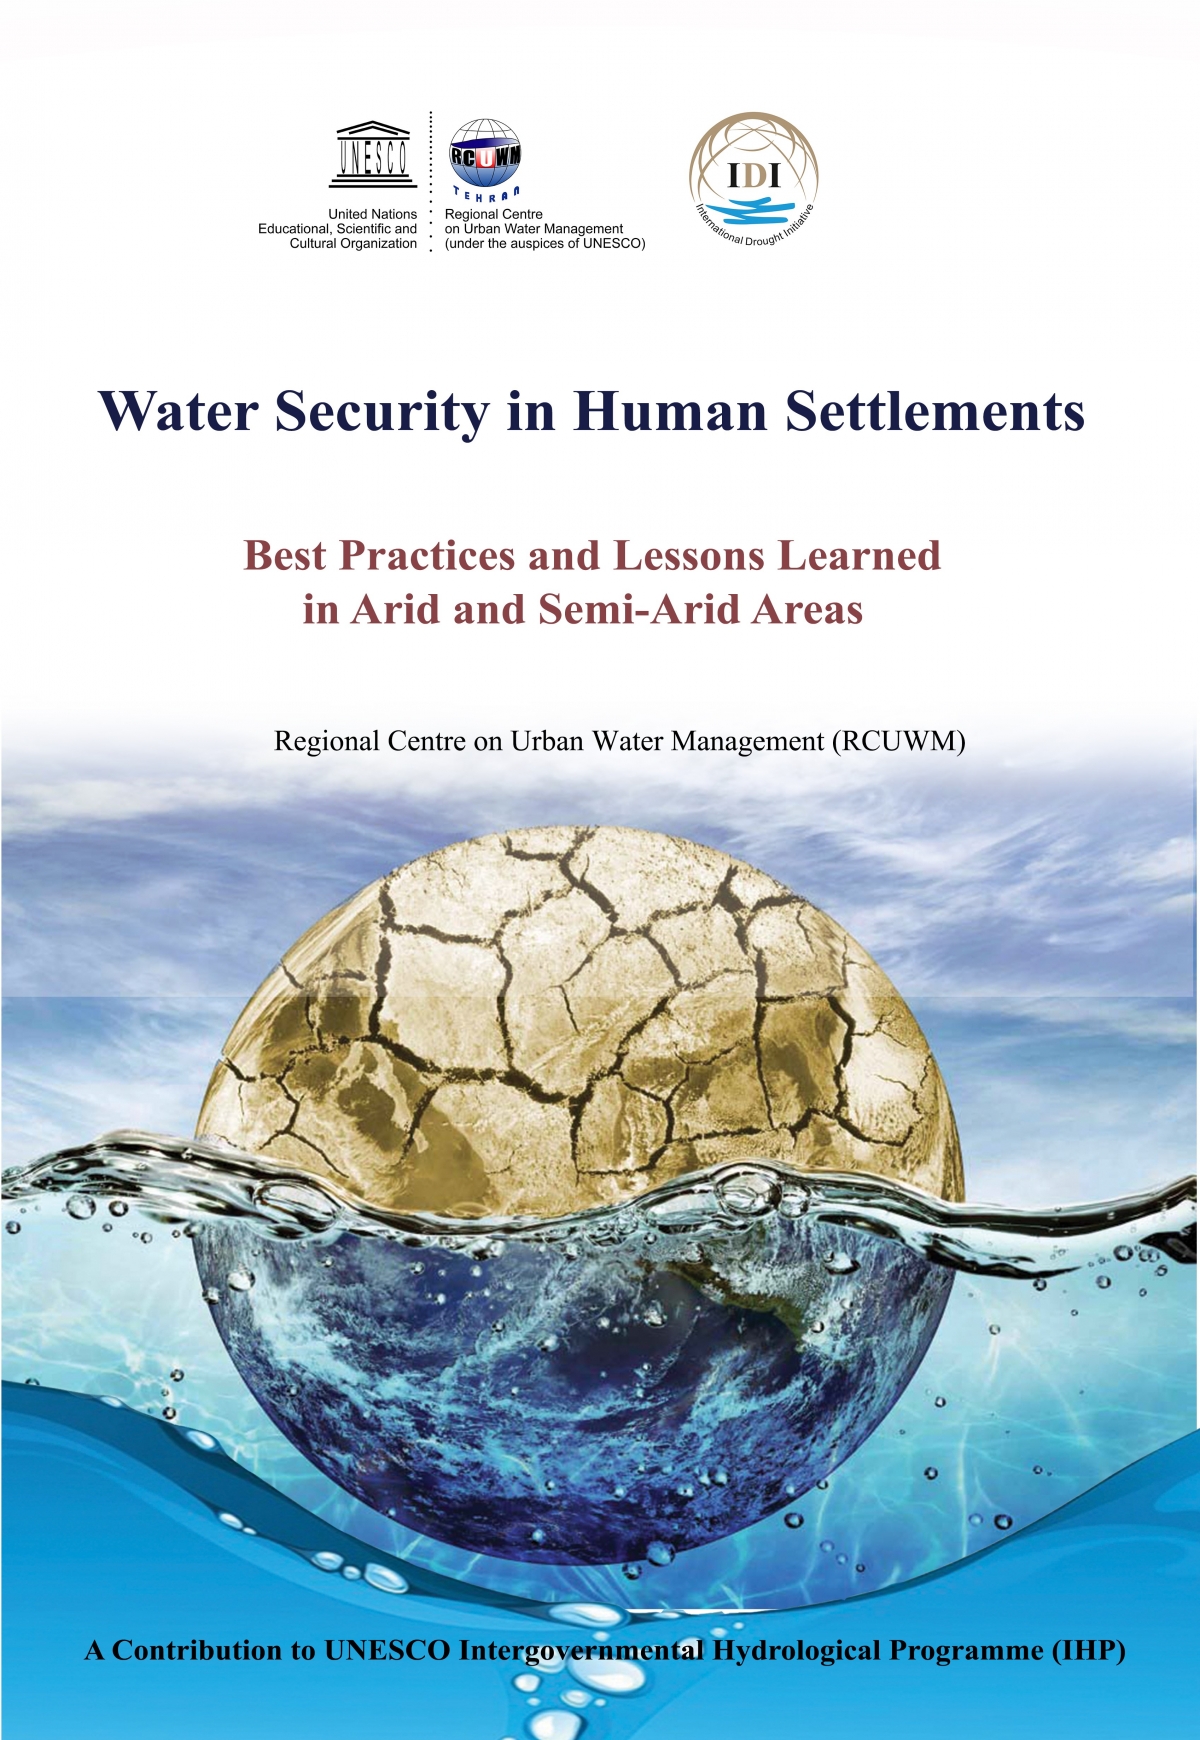 speech on water security